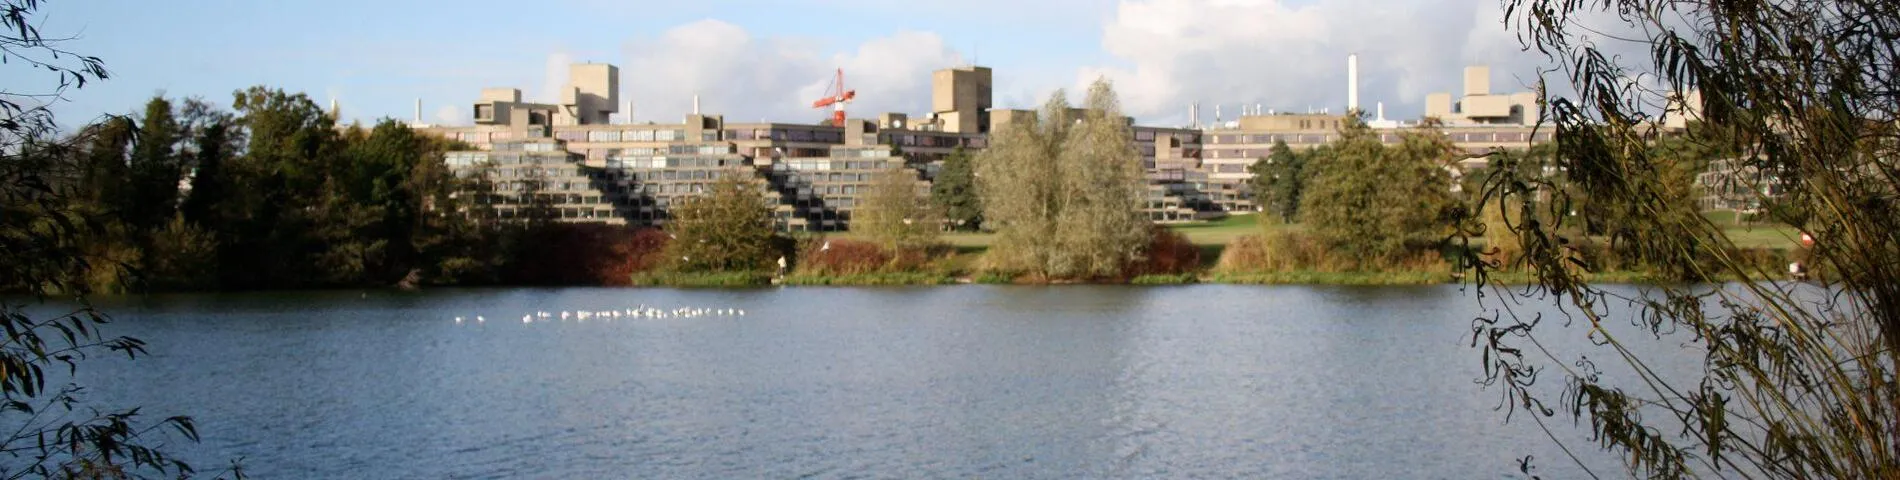 University of East Anglia صورة 1